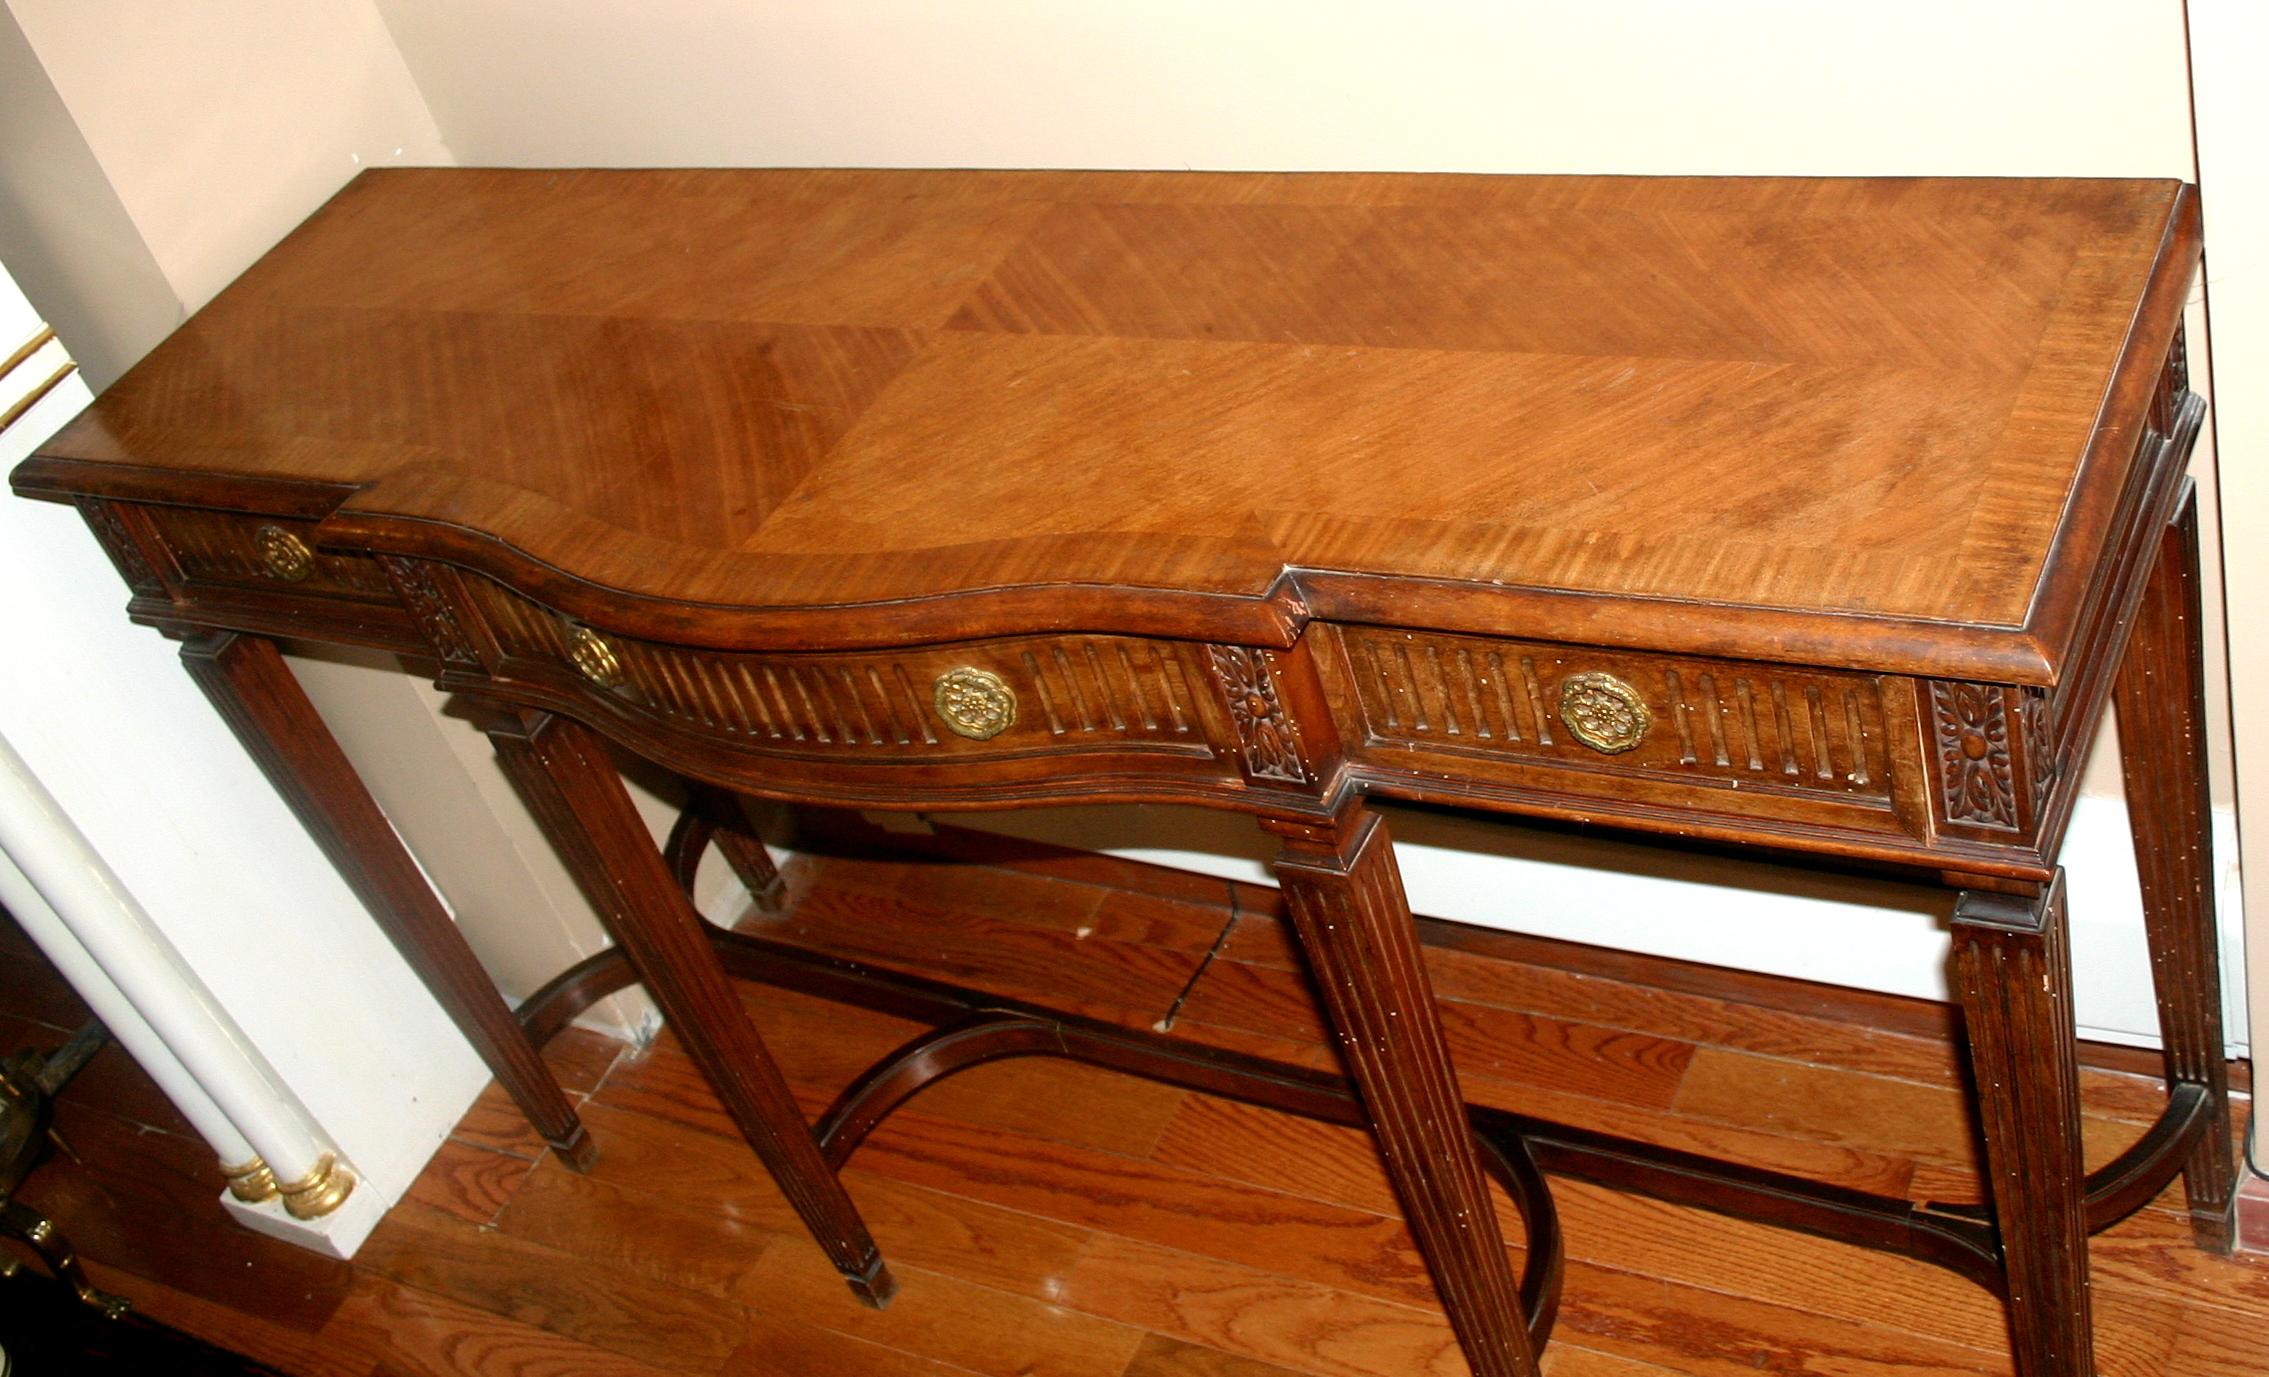 Table console de style Louis XVI, circa 1900.

Mesures :
Longueur : 63